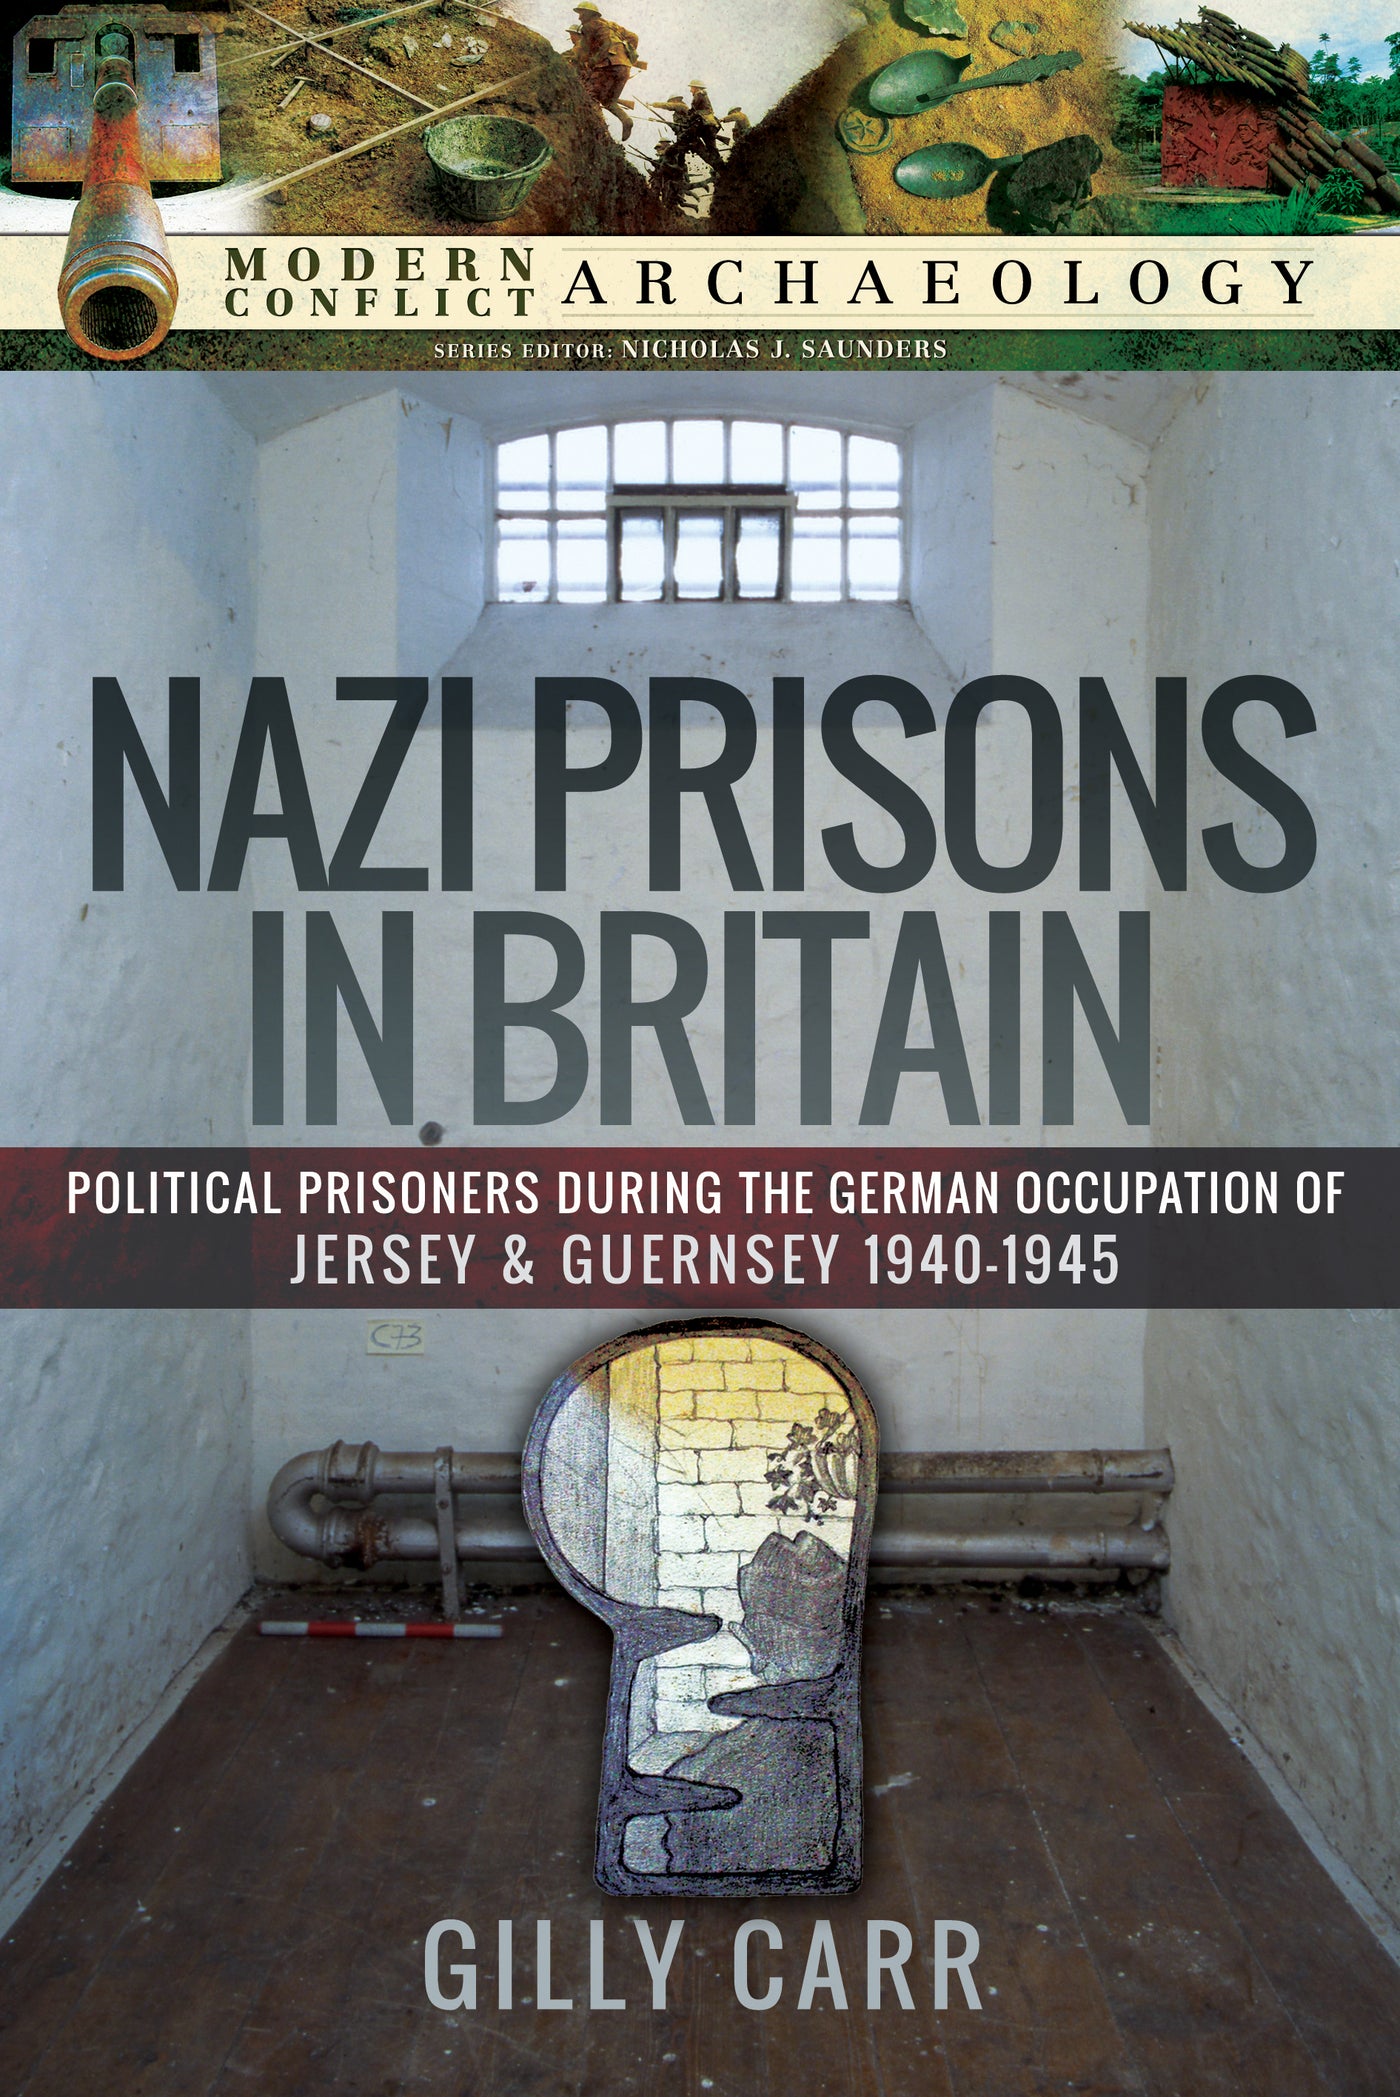 Nazi Prisons in Britain